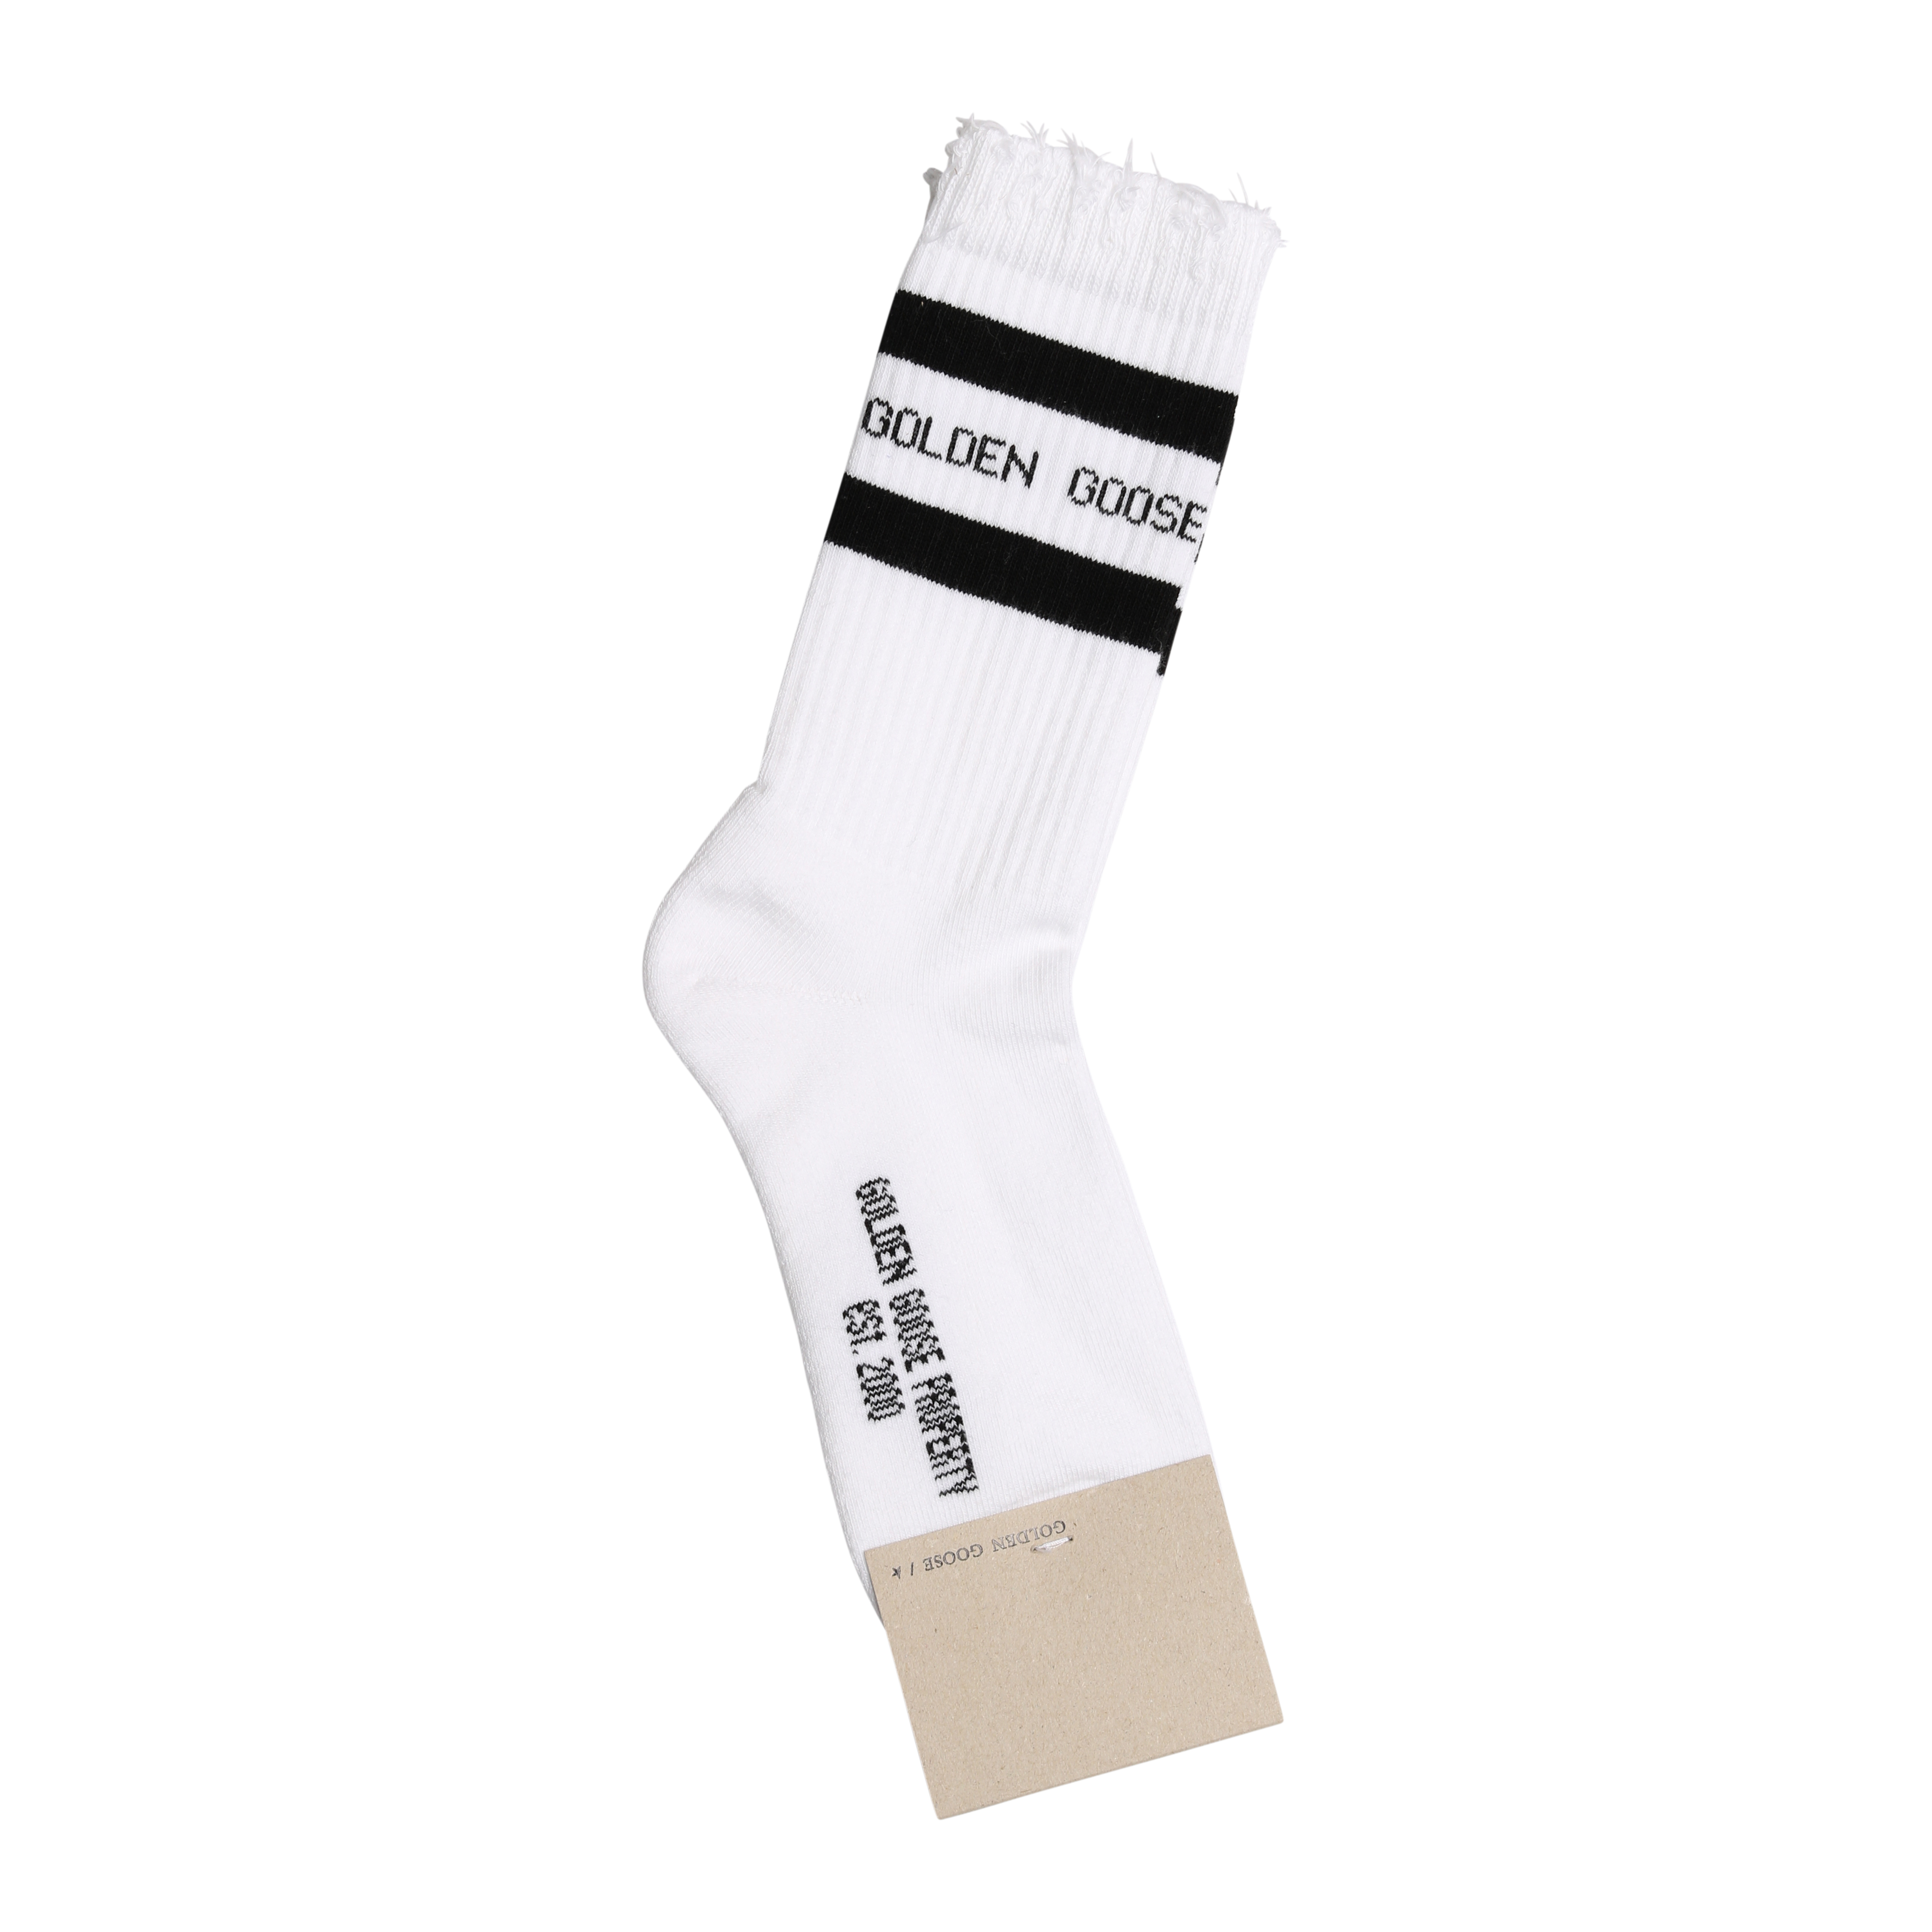 Golden Goose Socks High Rib in White/Black L